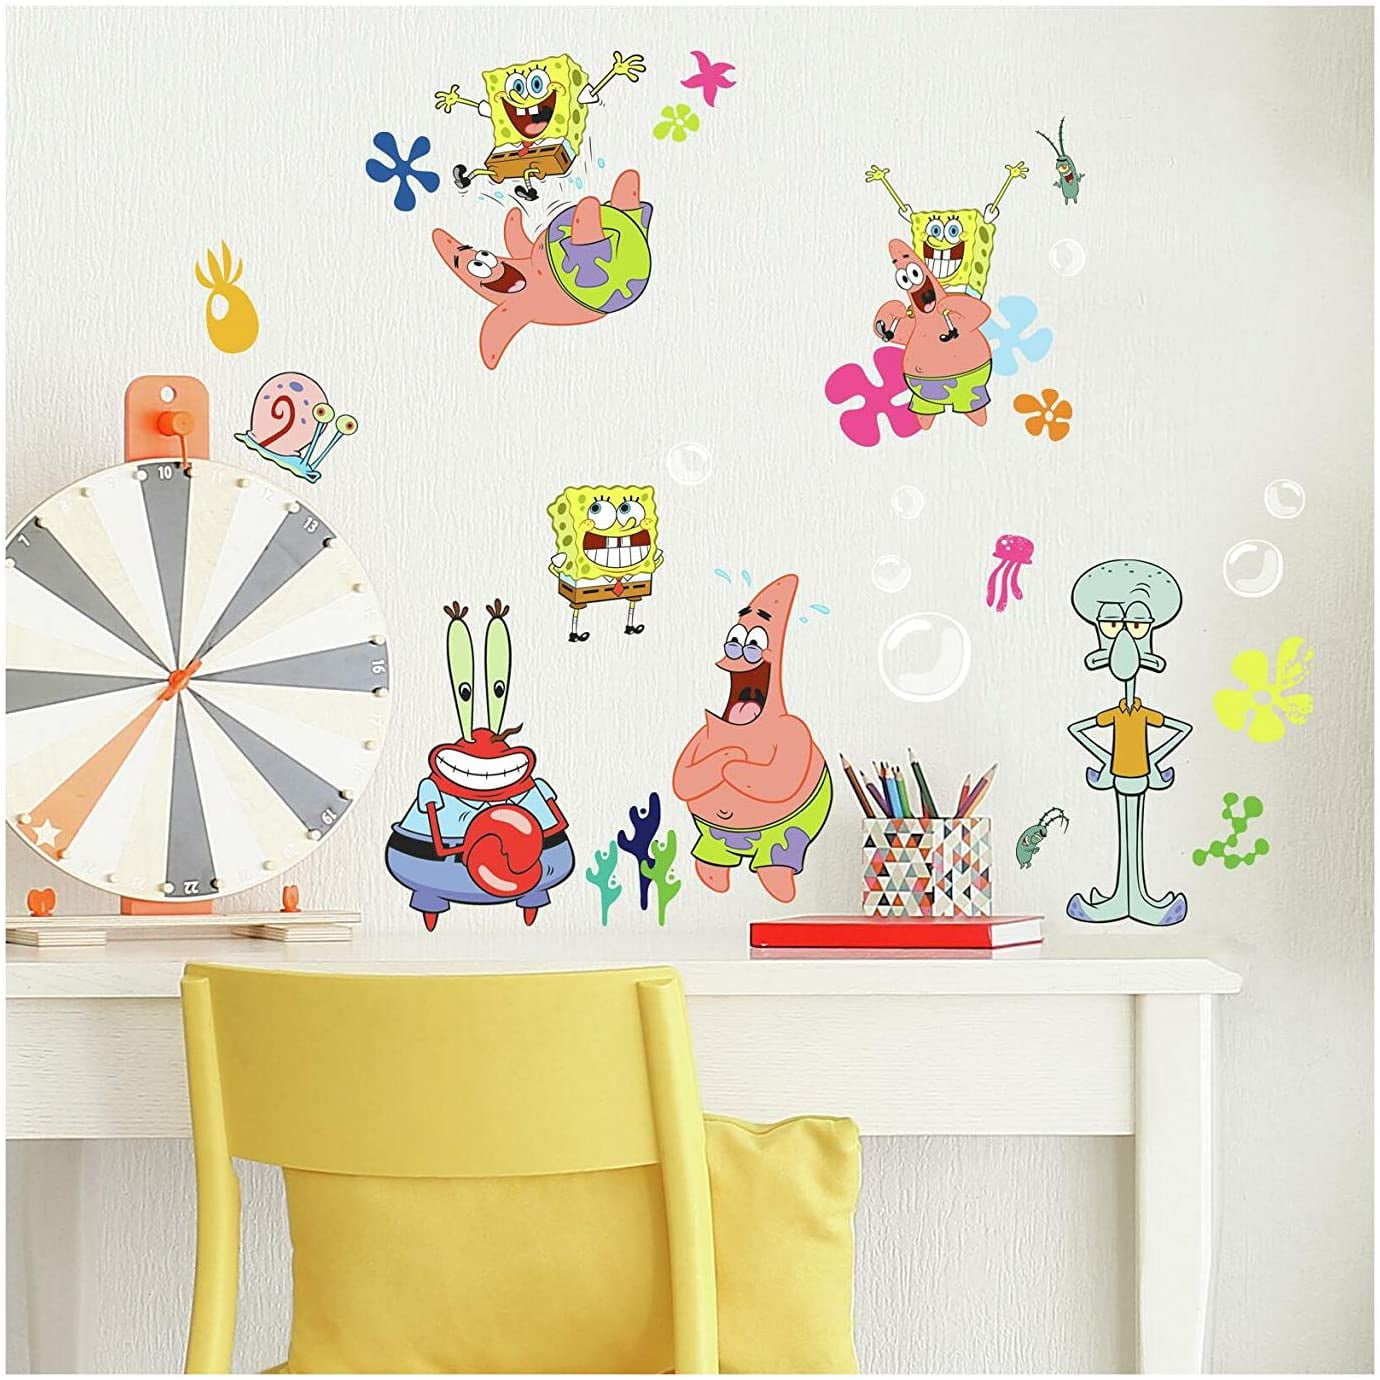 45 New SPONGEBOB SQUAREPANTS WALL DECALS Kids Bedroom Stickers Room Decorations